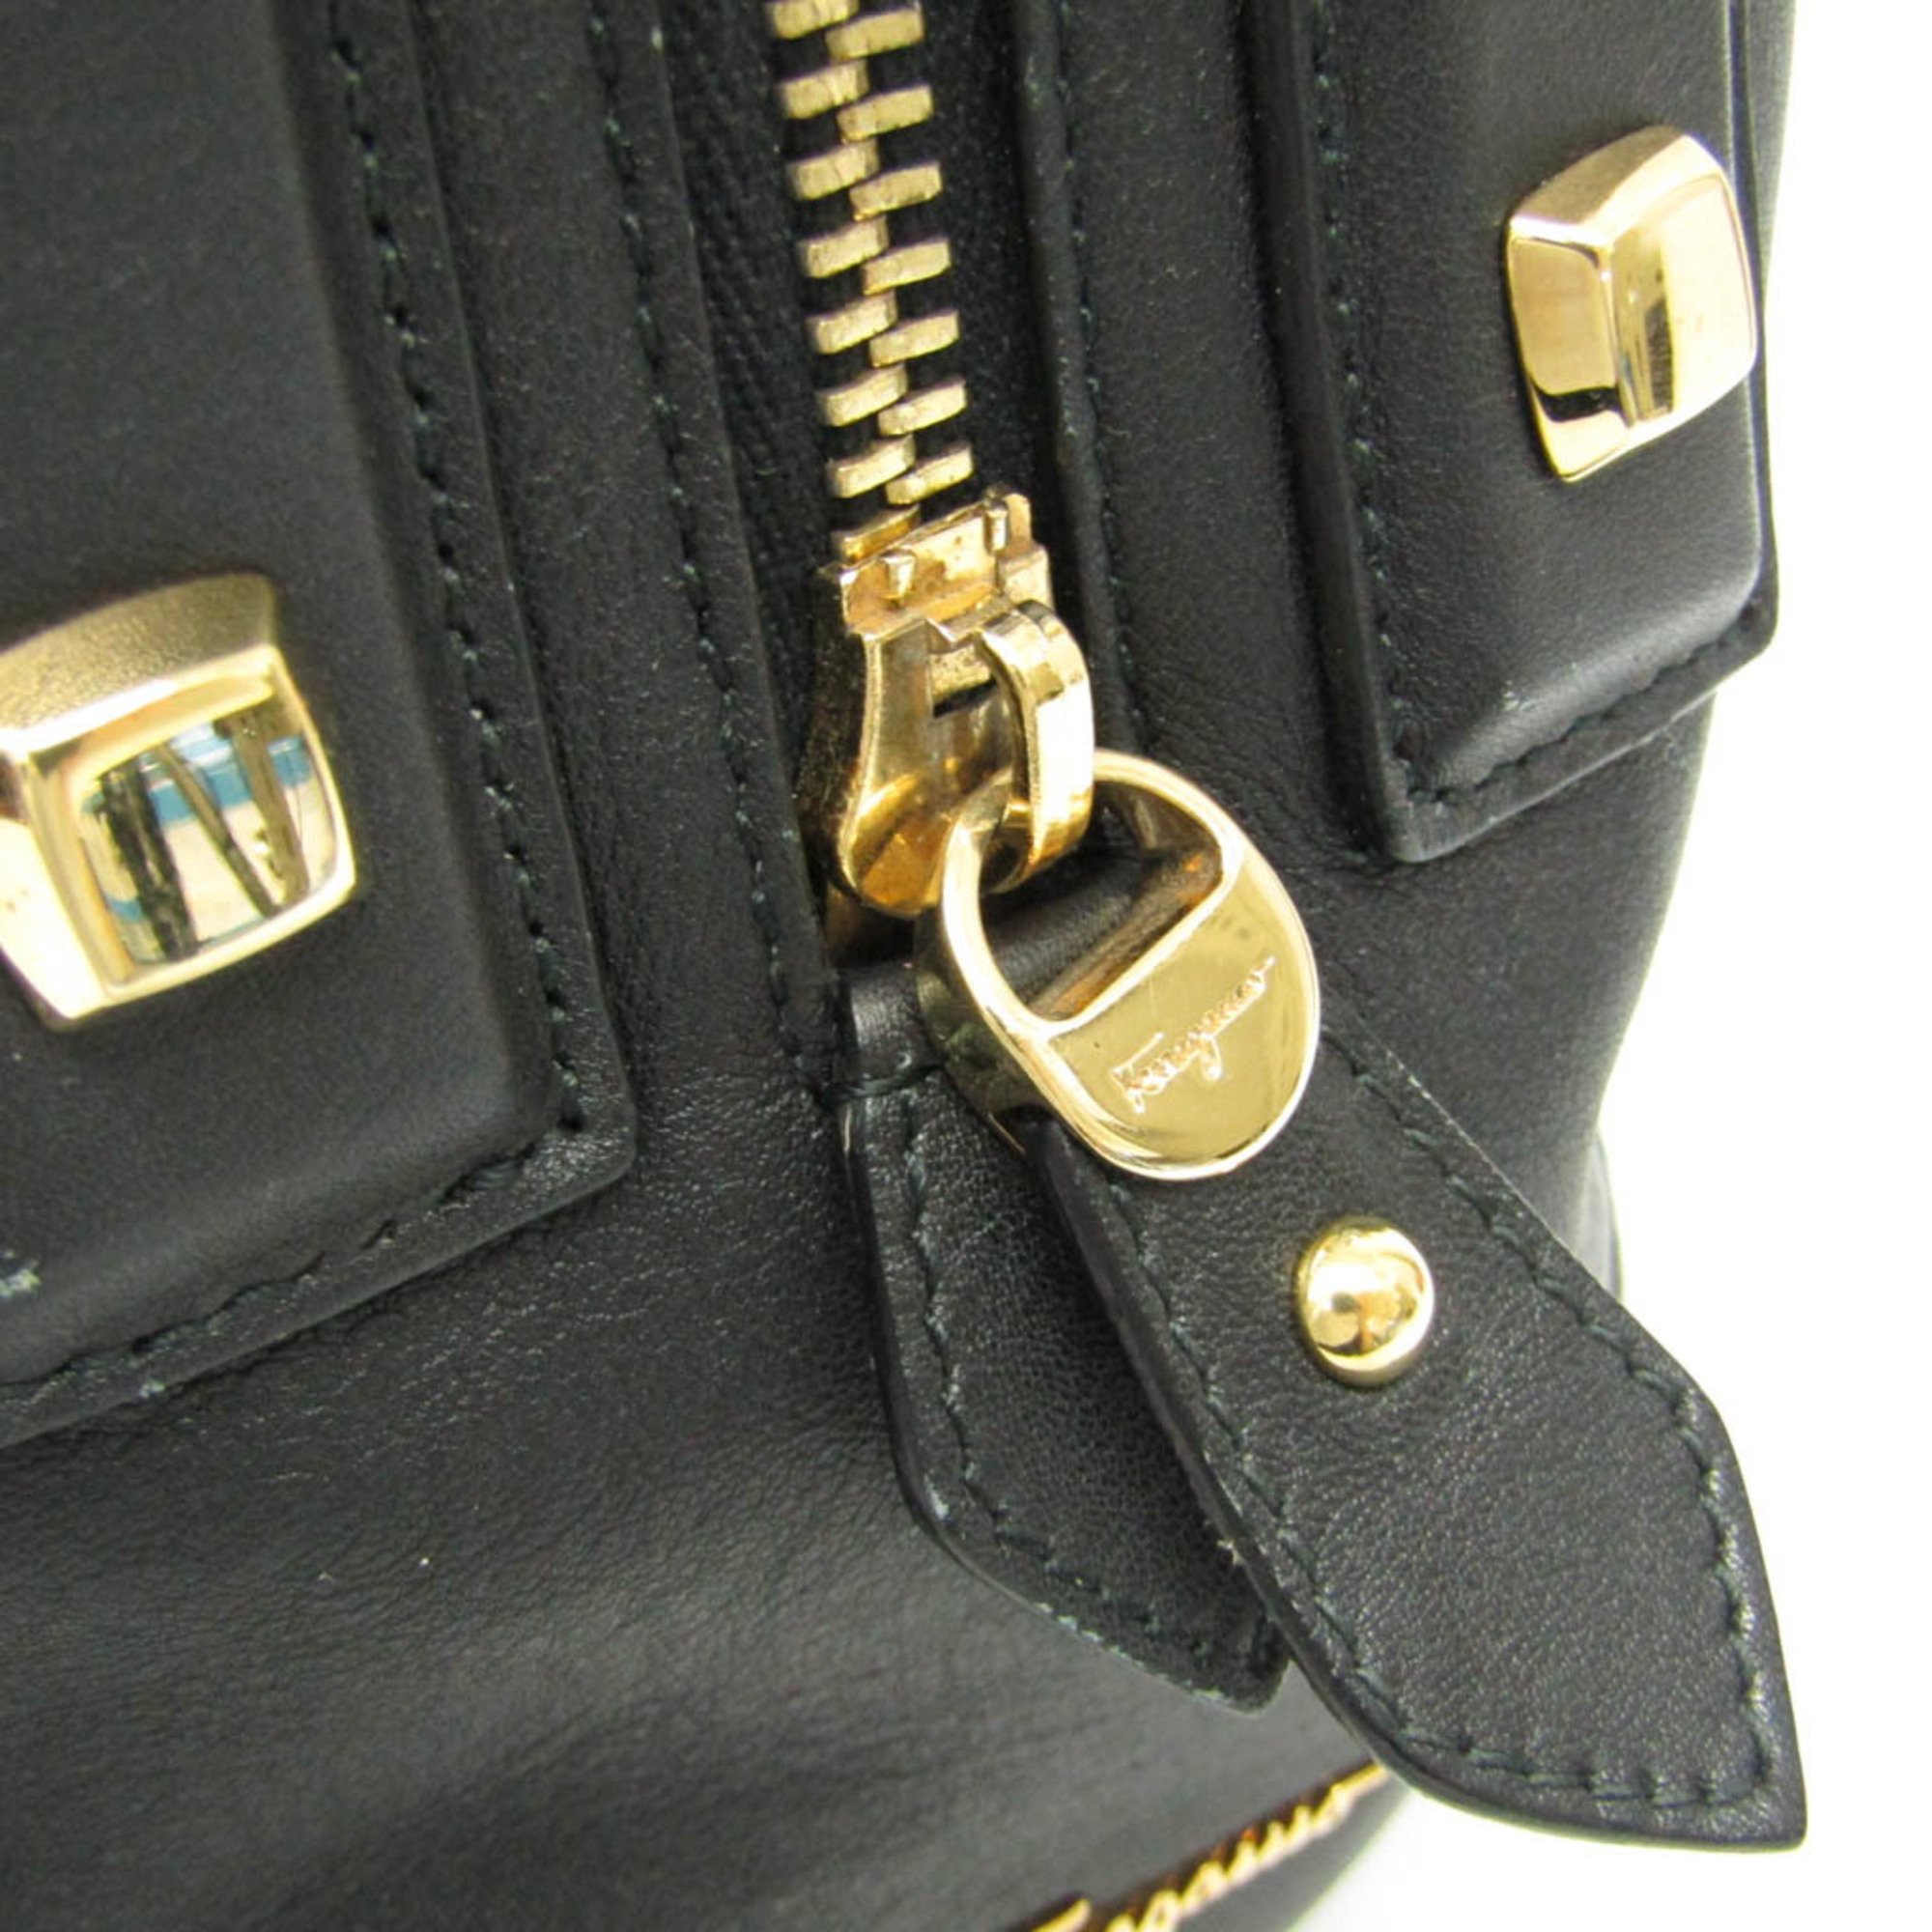 Salvatore Ferragamo BW-21 D374 Women's Leather Handbag Black